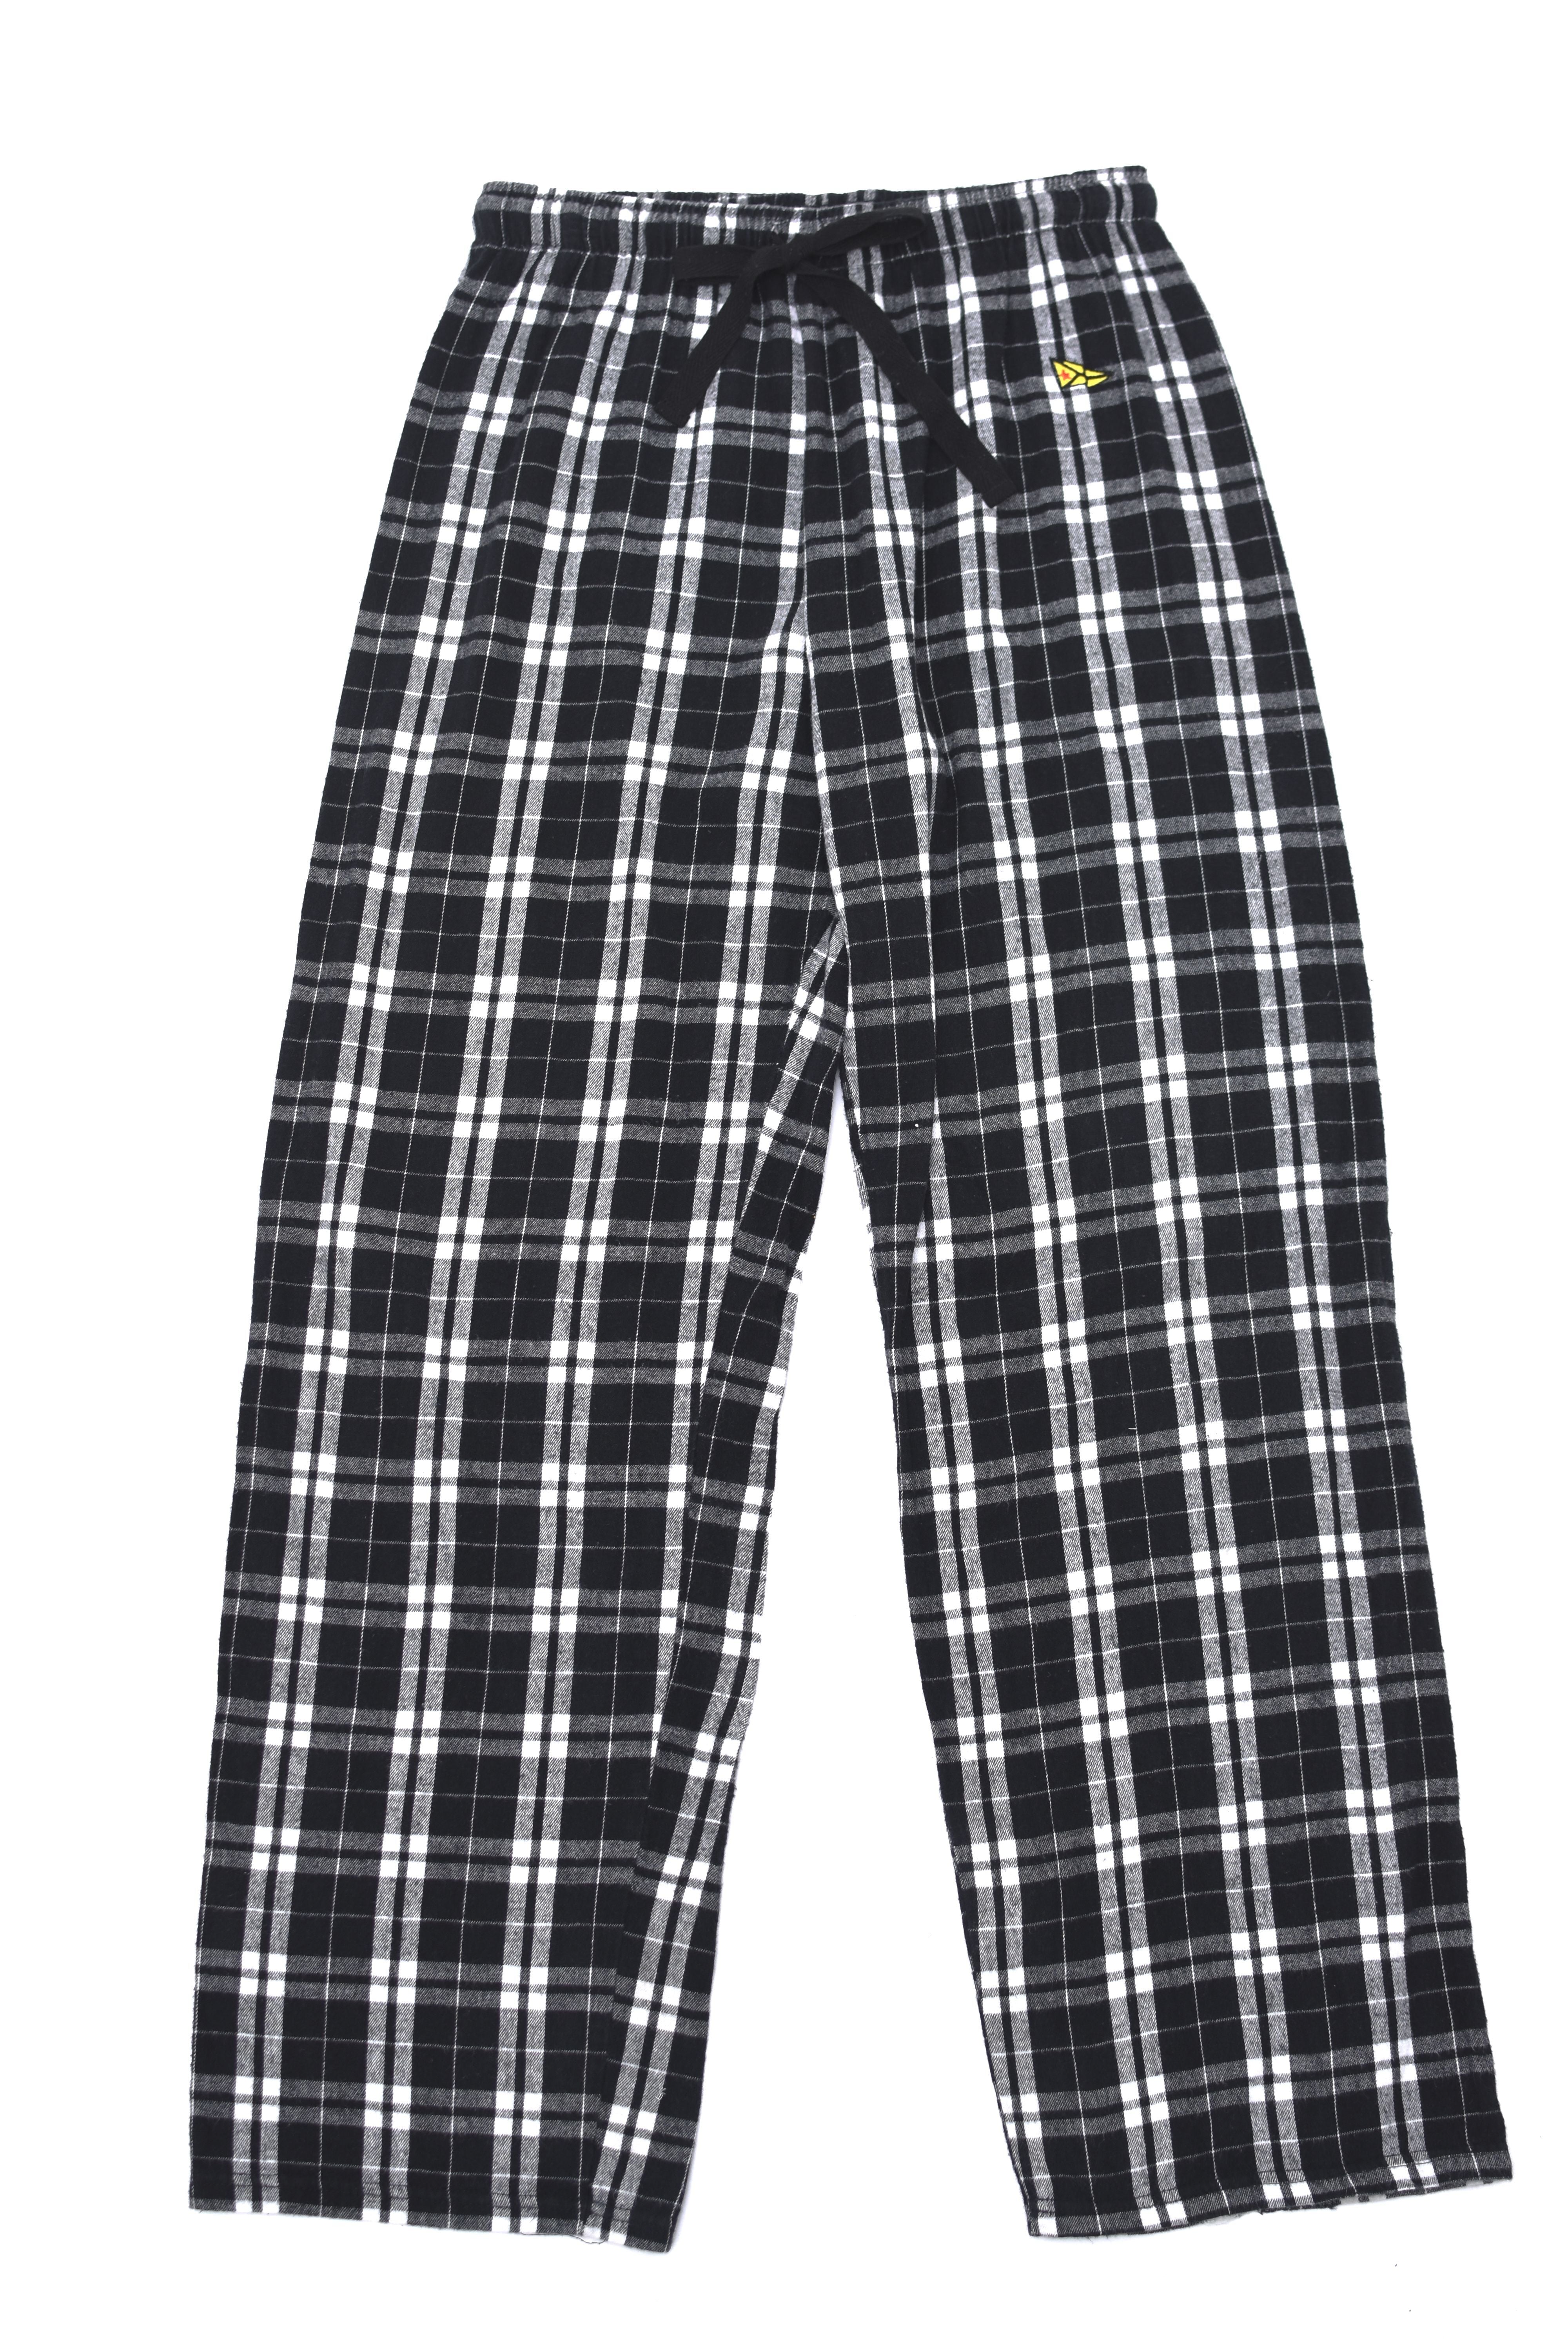 Black flannel check cotton easy pants